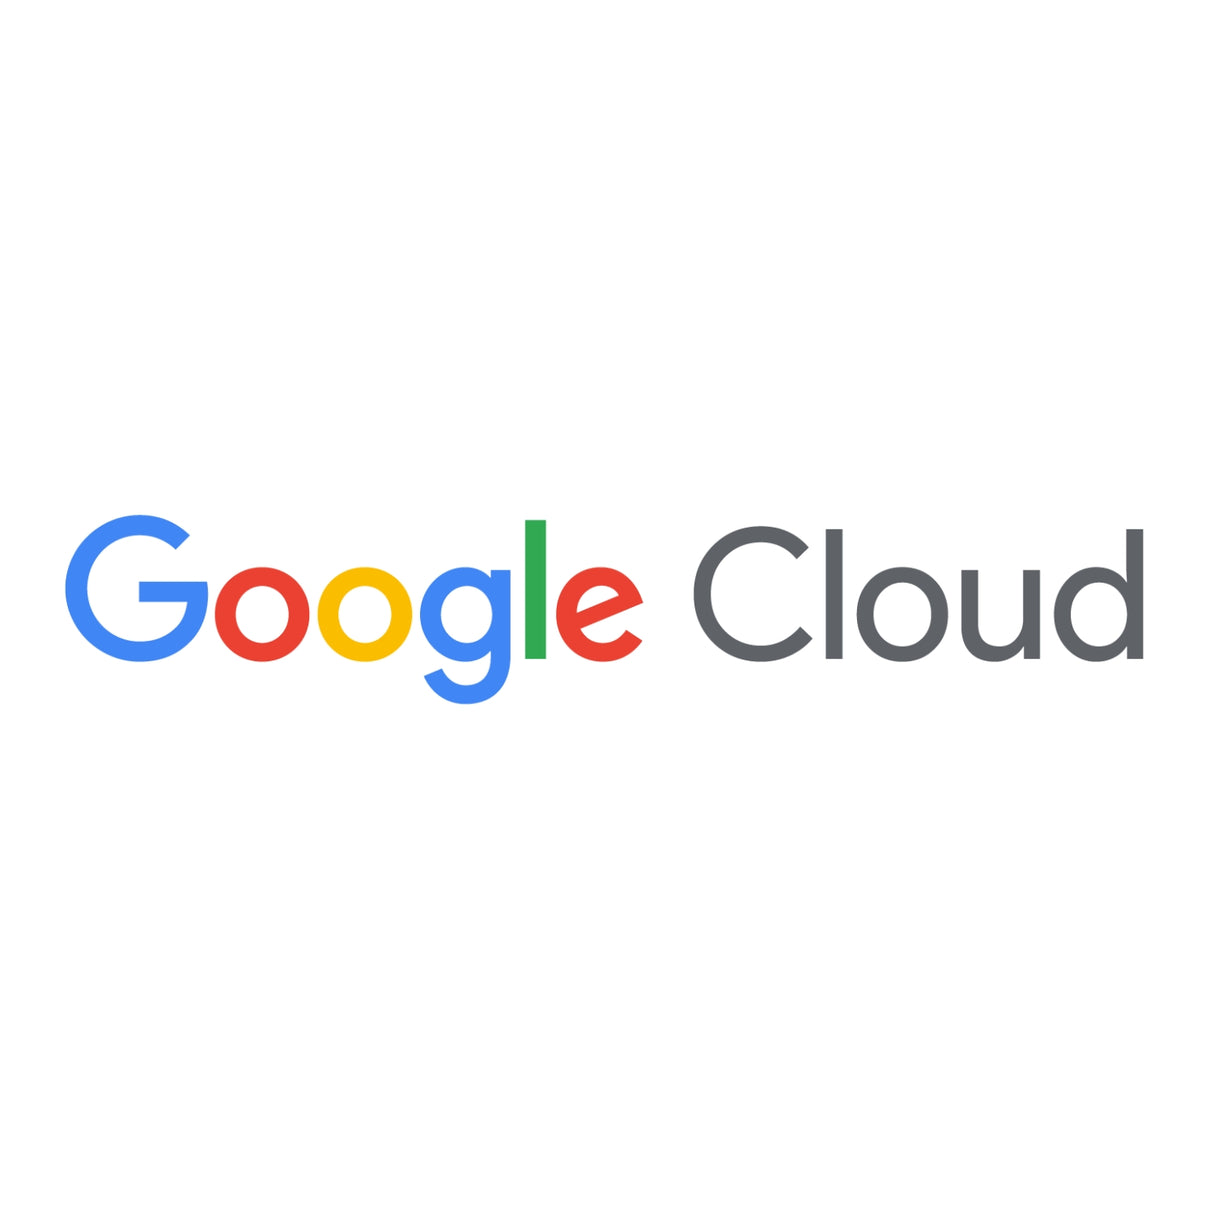 Google Cloud - Cloud Computing Services